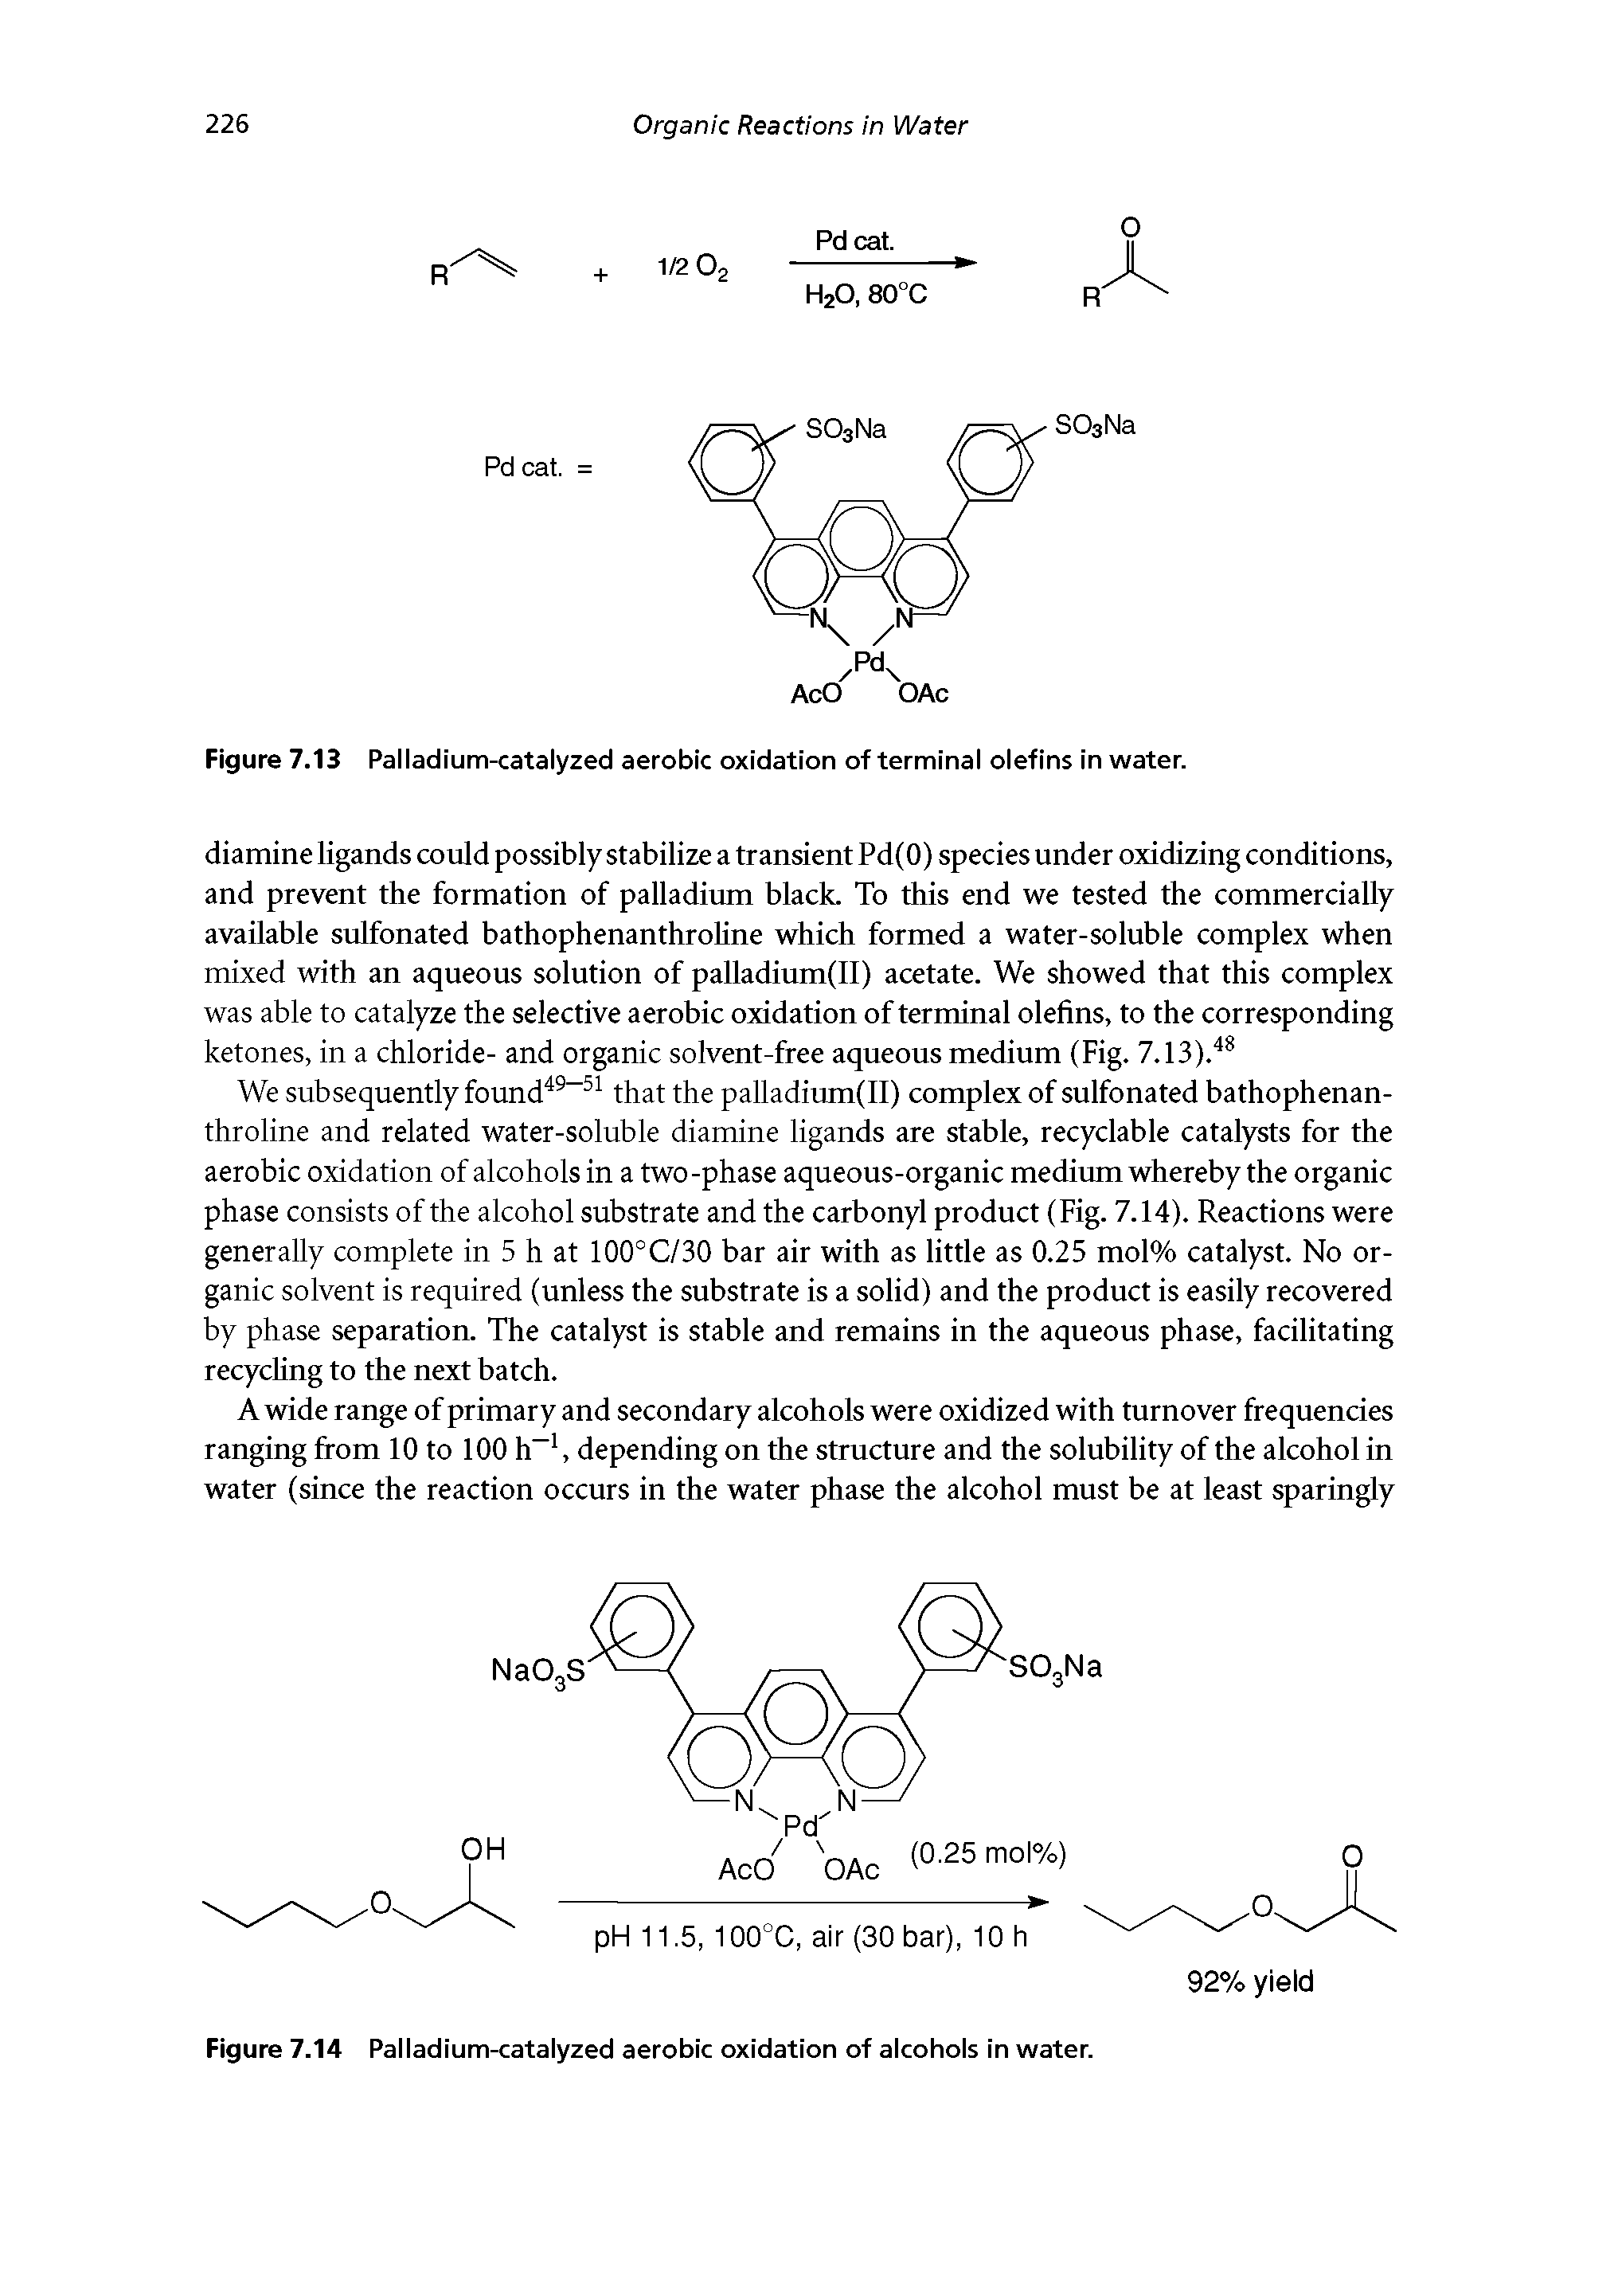 Figure 7.14 Palladium-catalyzed aerobic oxidation of alcohols in water.